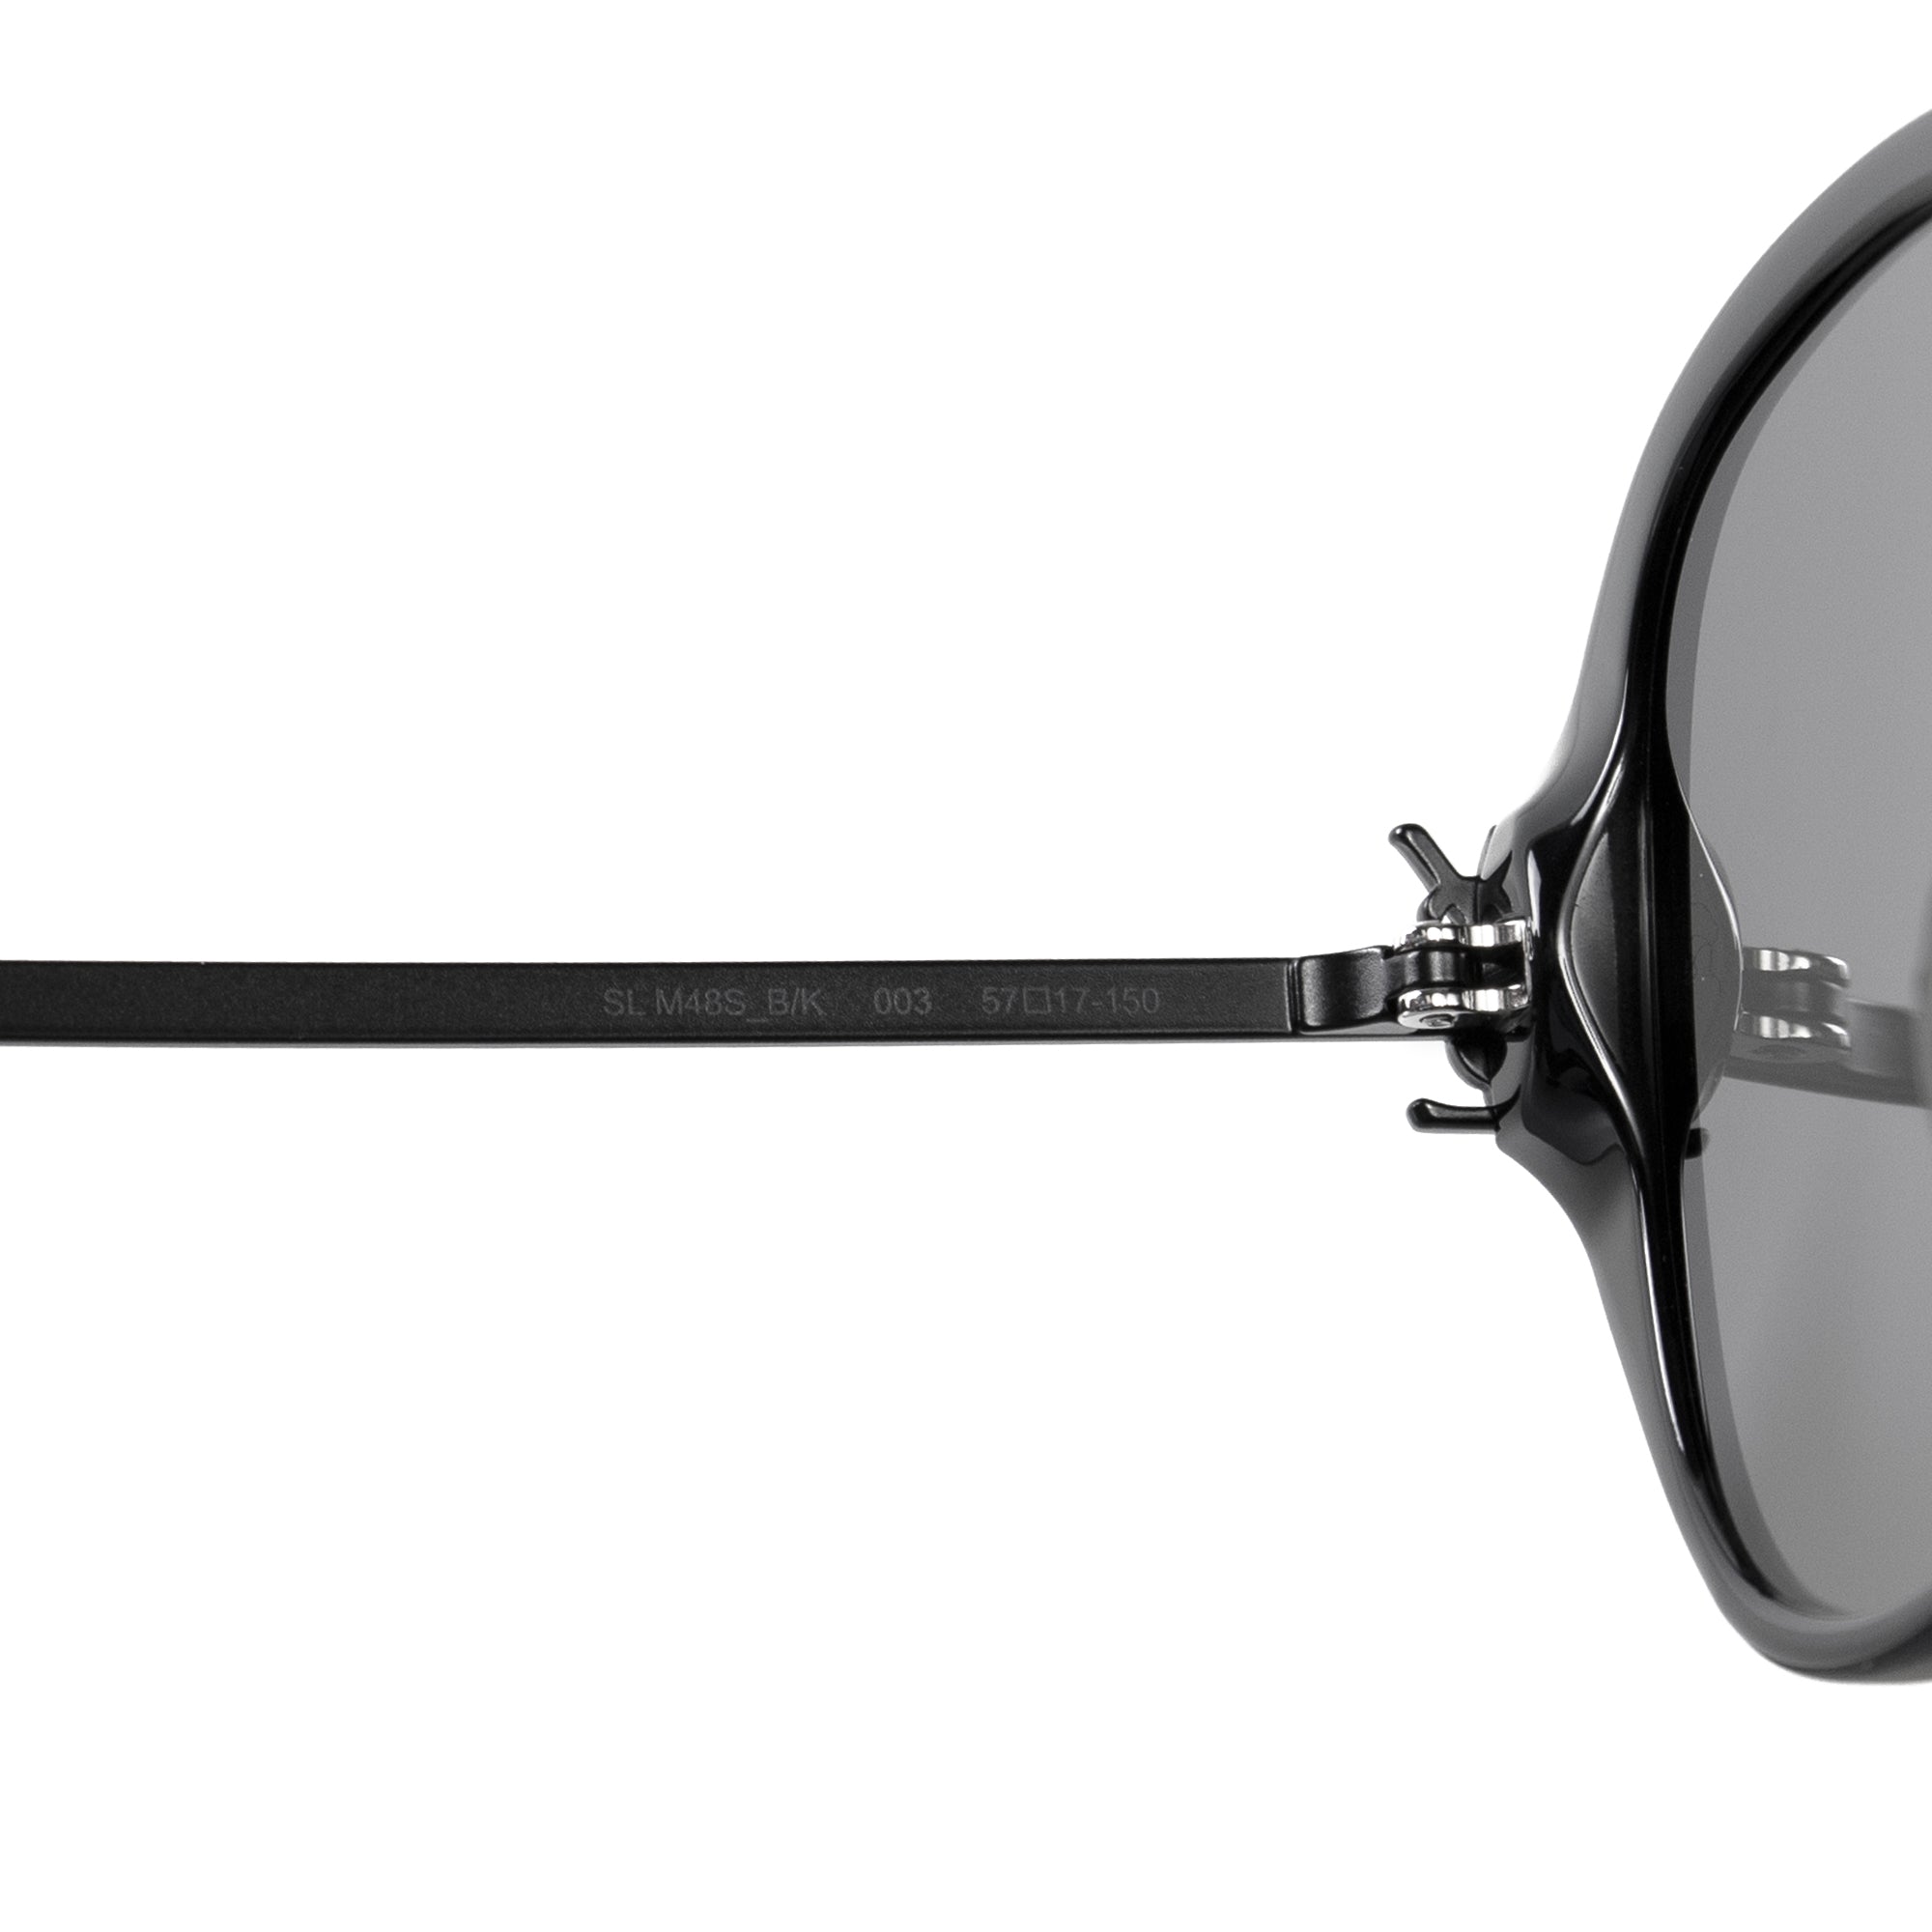 Saint Laurent Oval Sunglasses SLM48S BK 003 57